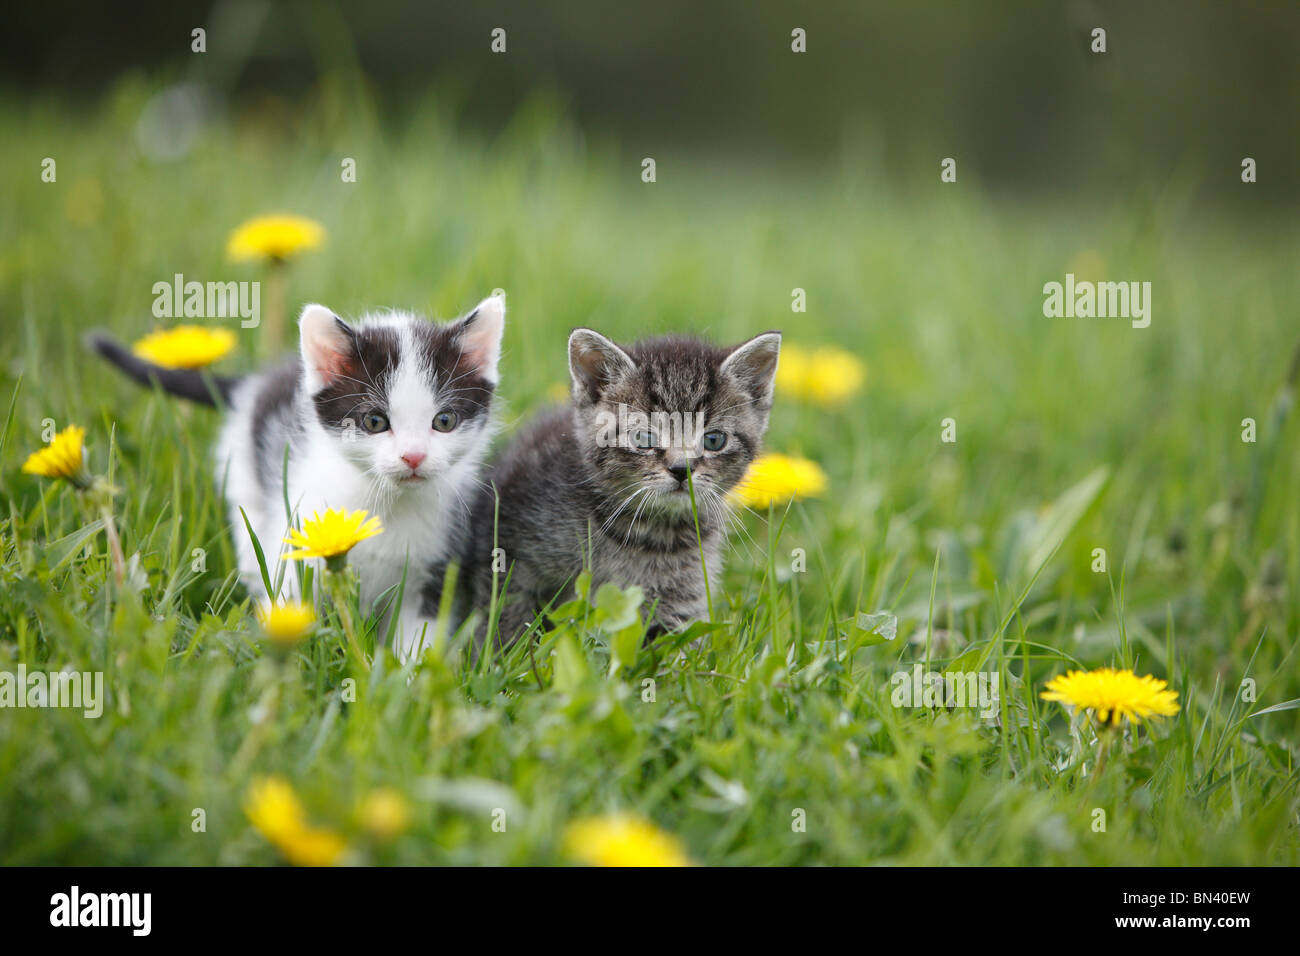 domestic cat, house cat (Felis silvestris f. catus), two 5 weeks old kittens standing side by side in a dandelion meadow, Germa Stock Photo